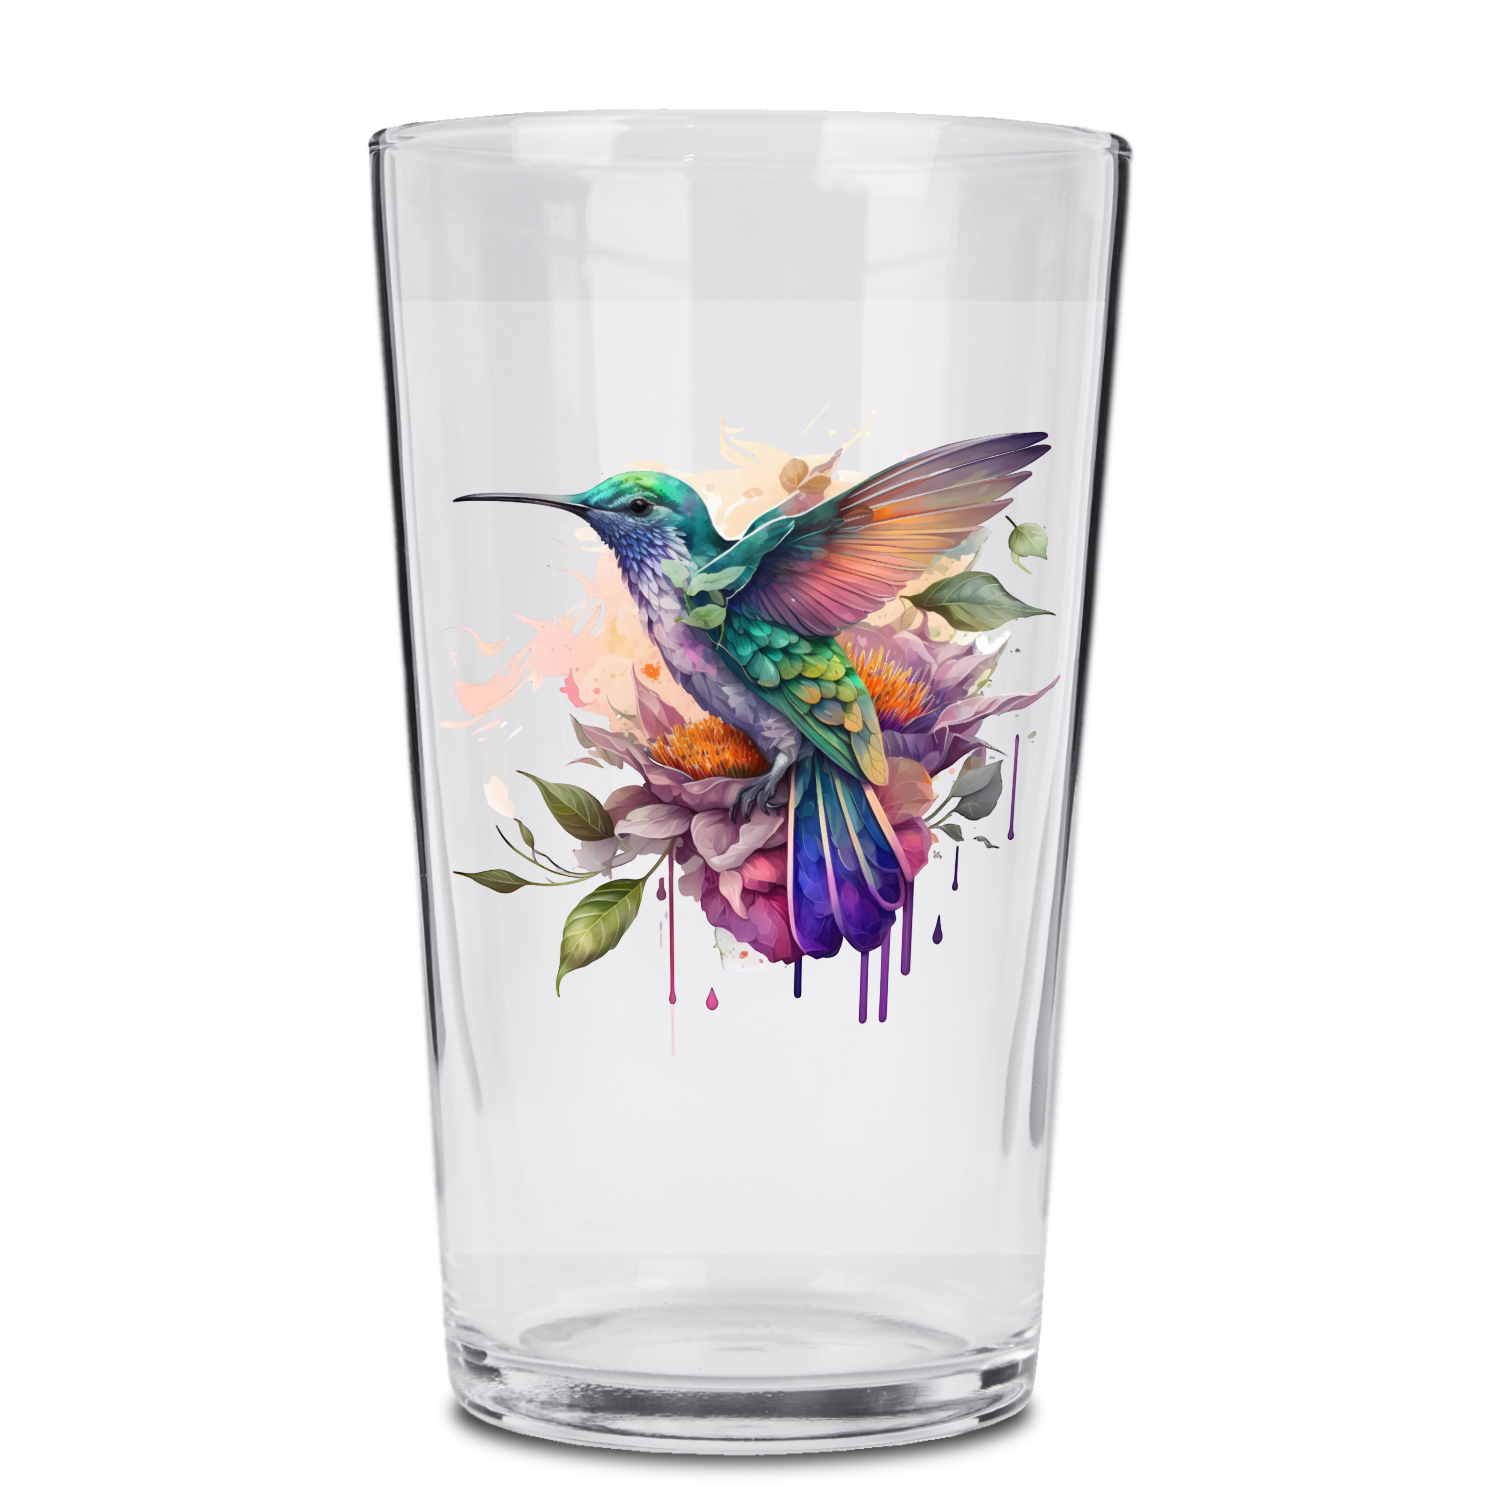 Hummingbird Pint Glass with Watercolor Design - Expressive DeZien 